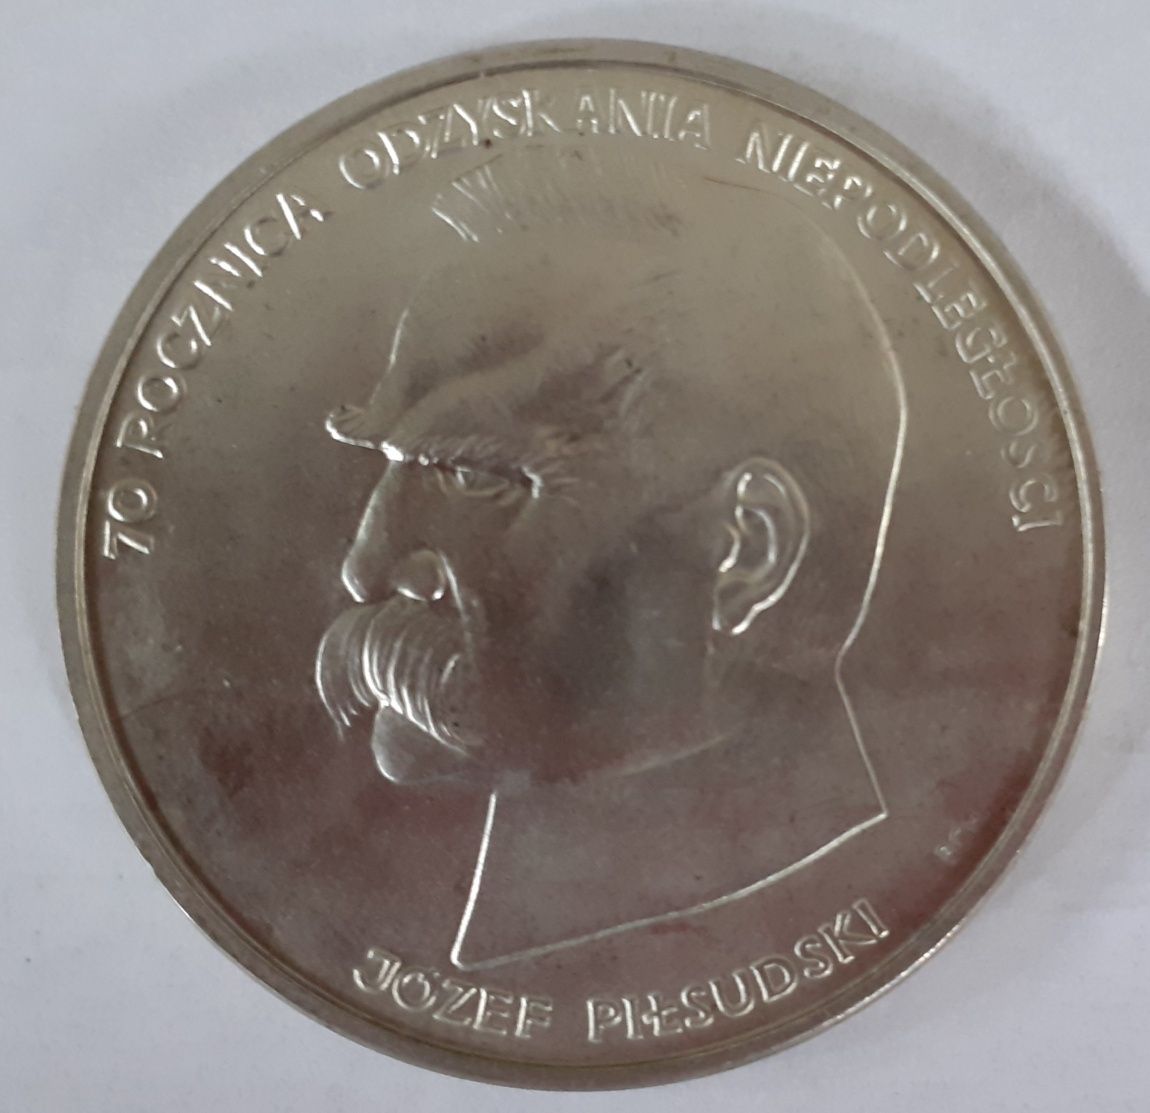 Moneta Józef Piłsudski 1988r.